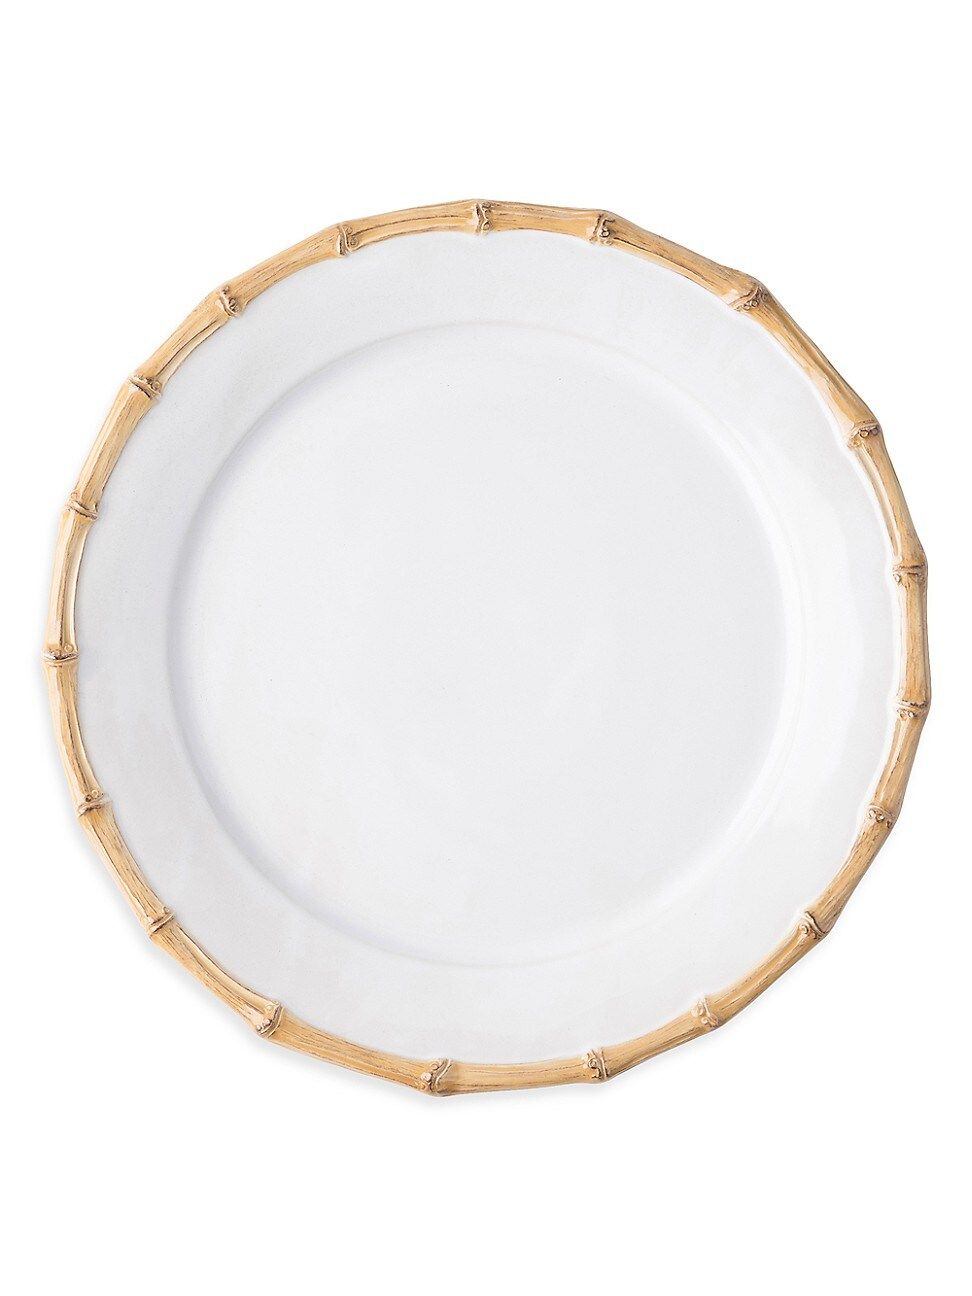 Classic Bamboo Dessert/Salad Plate | Saks Fifth Avenue